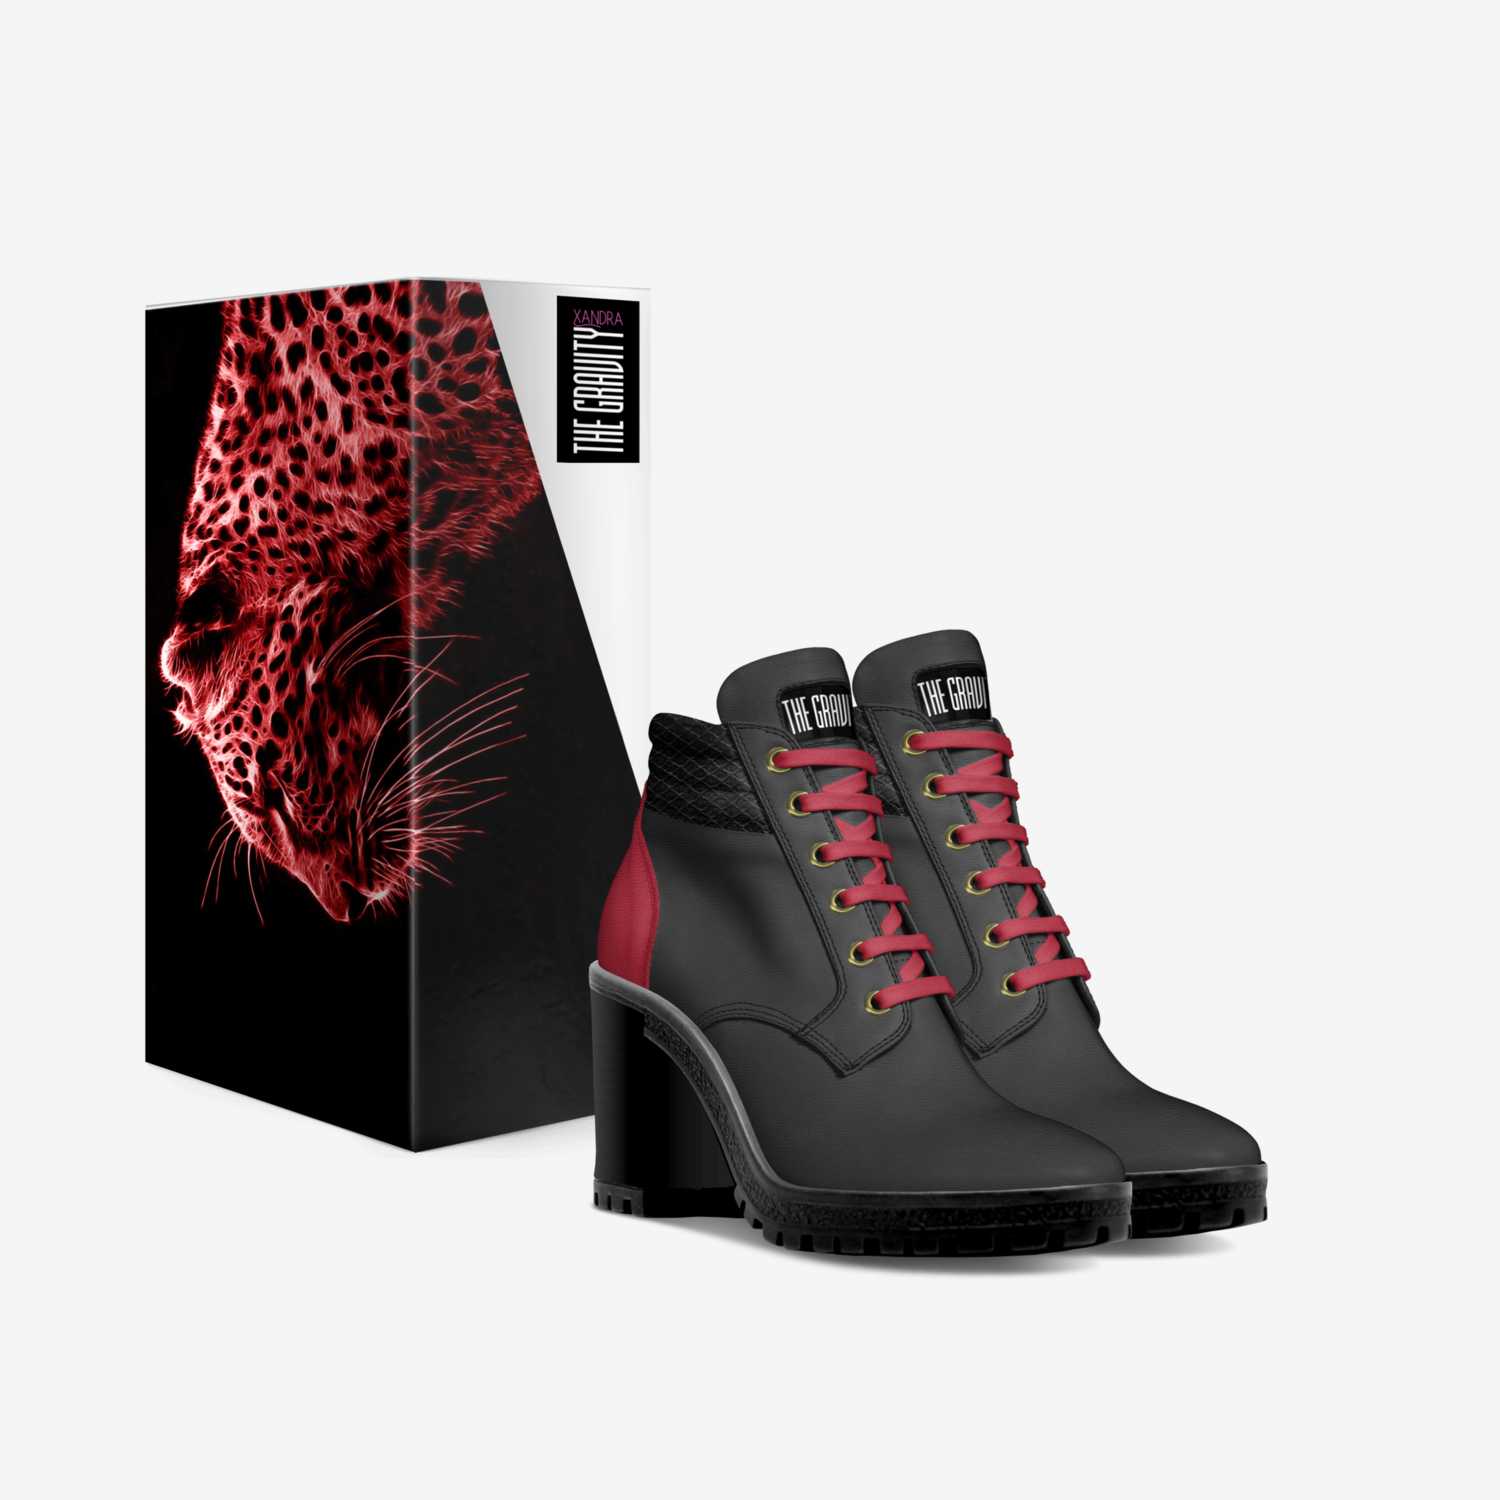 The Gravity Xandra custom made in Italy shoes by Ita Akpan-ita | Box view